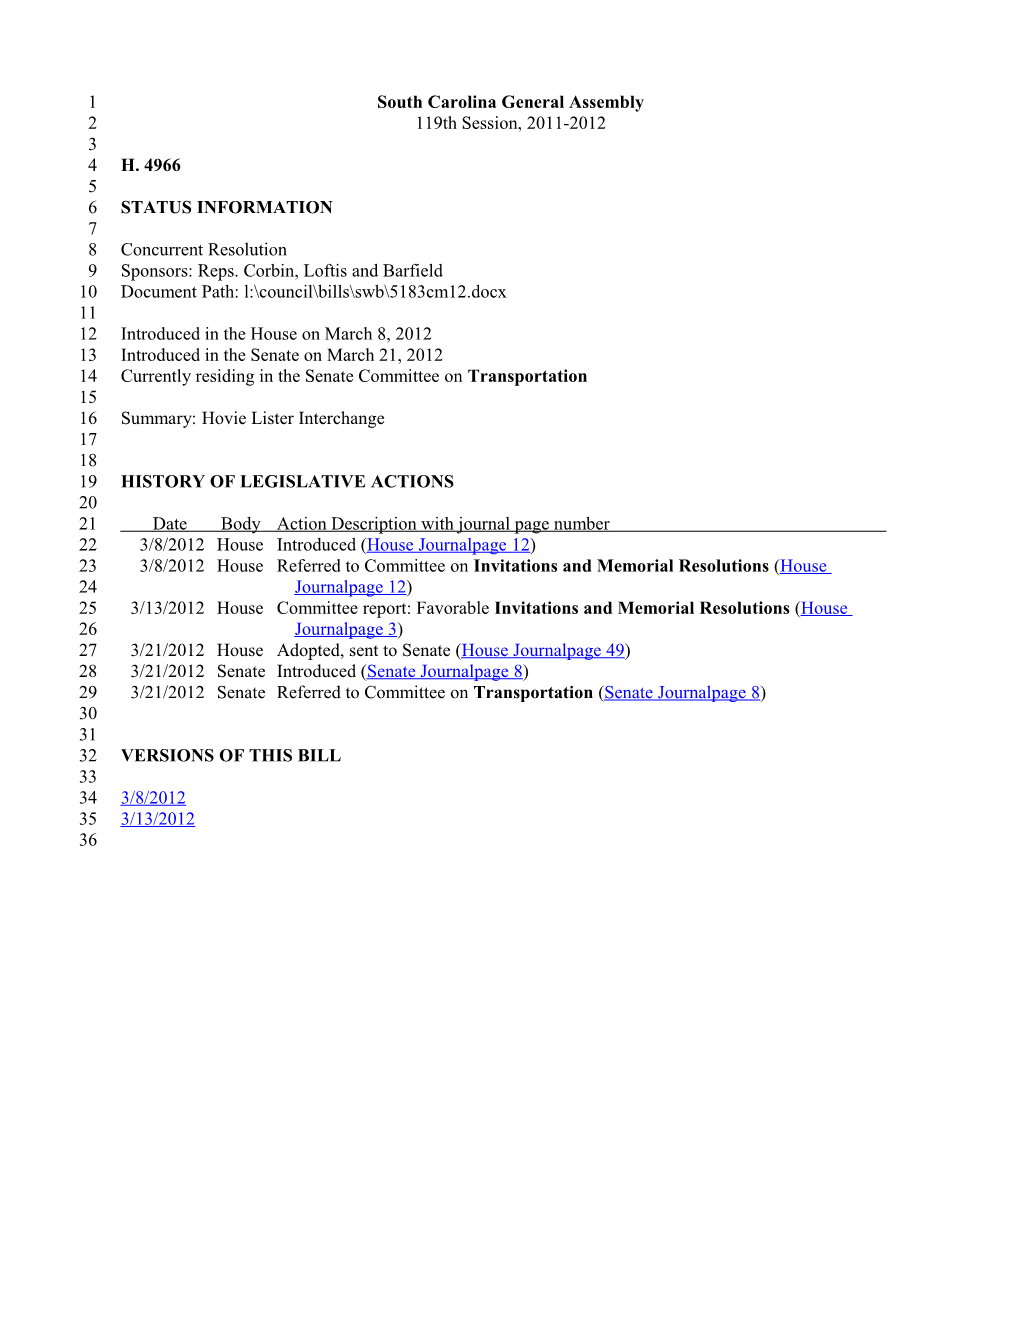 2011-2012 Bill 4966: Hovie Lister Interchange - South Carolina Legislature Online